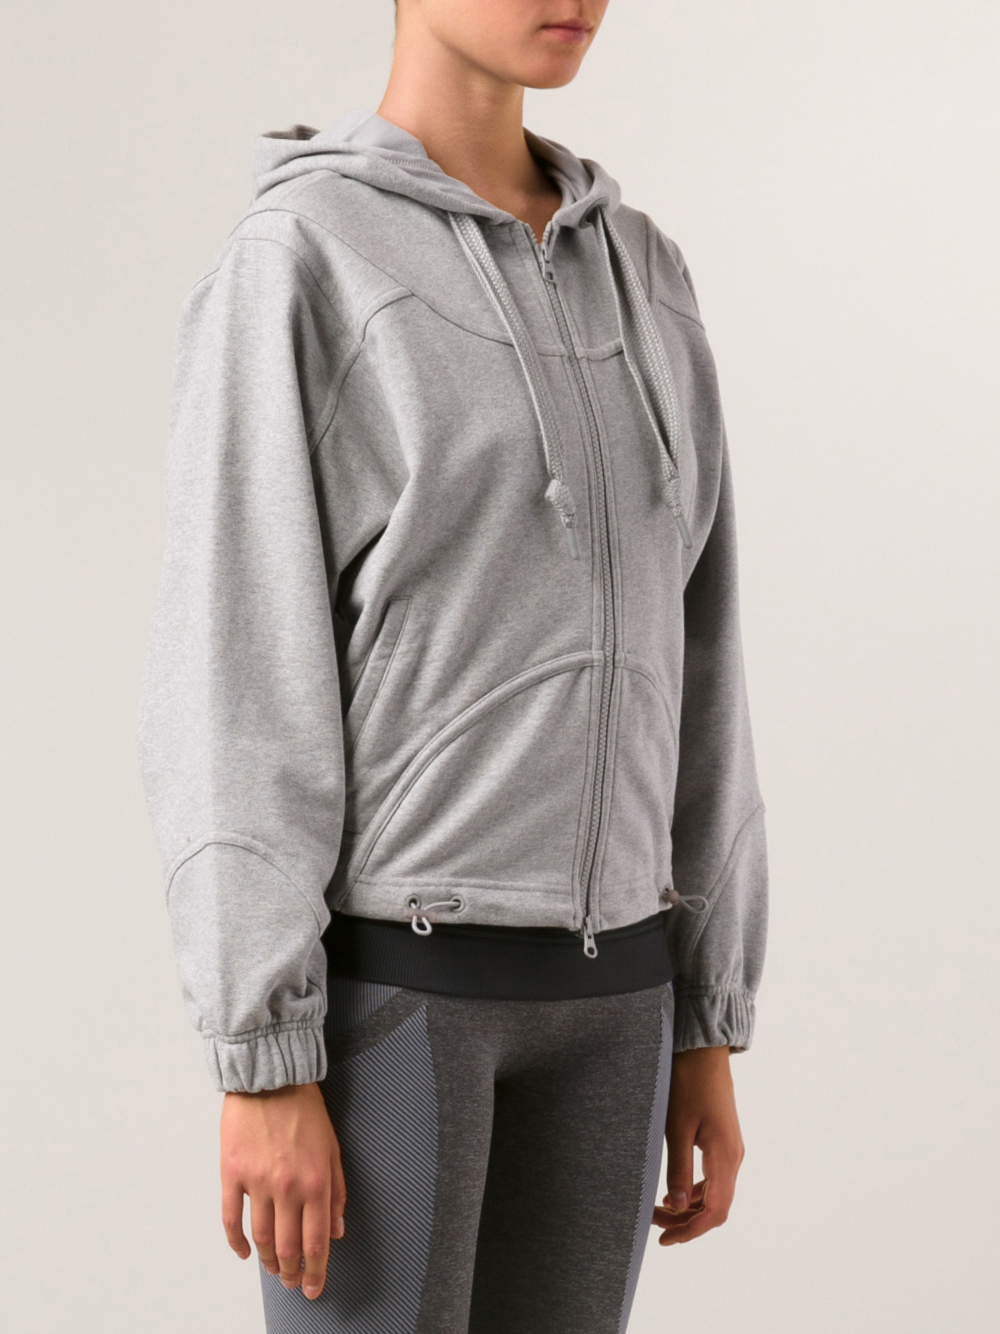 Lyst - Adidas By Stella Mccartney Zip Up Running Hoodie in Gray